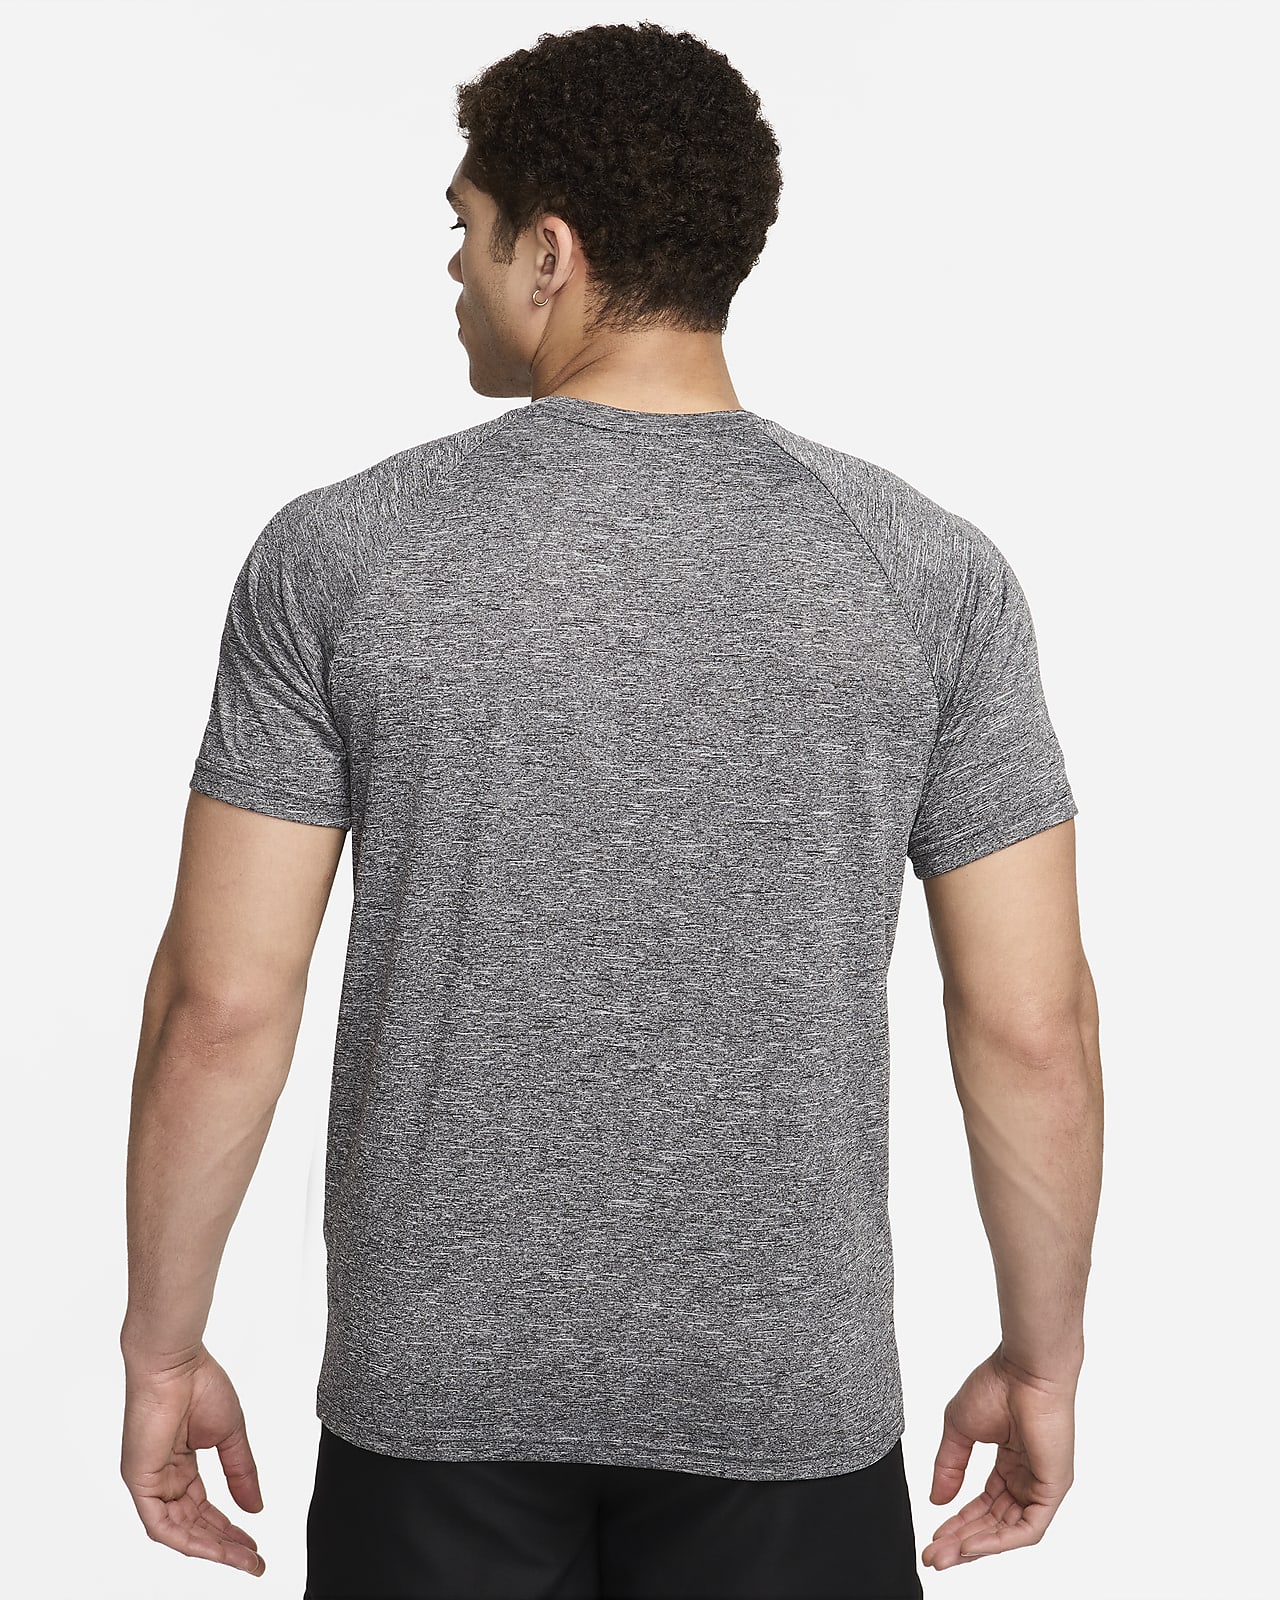 Nike Men's Heathered Short-Sleeve Hydroguard Shirt.